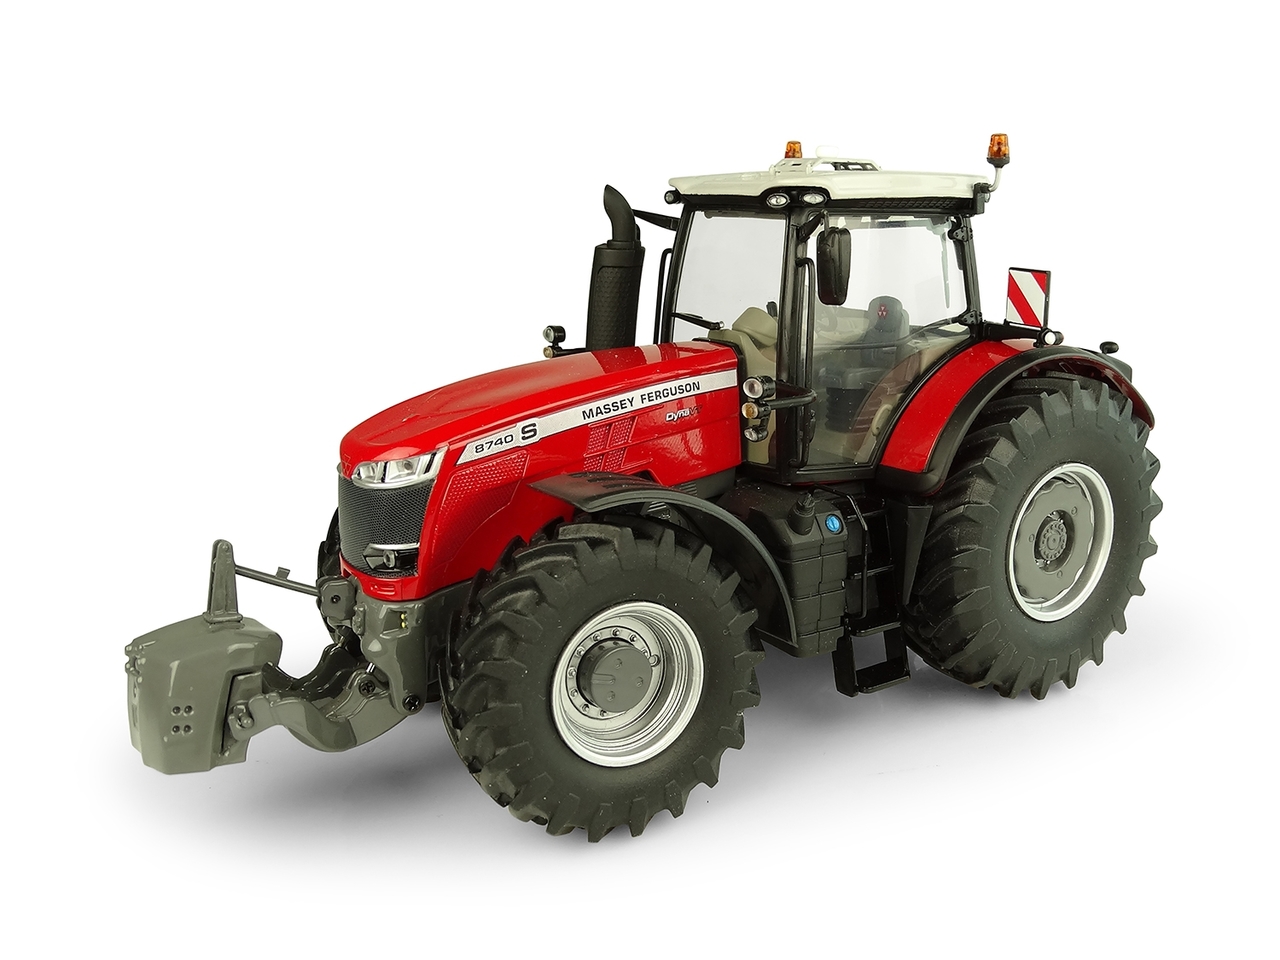 Massey Ferguson 8740 S Tractor 1/32 Diecast Model By Universal Hobbies